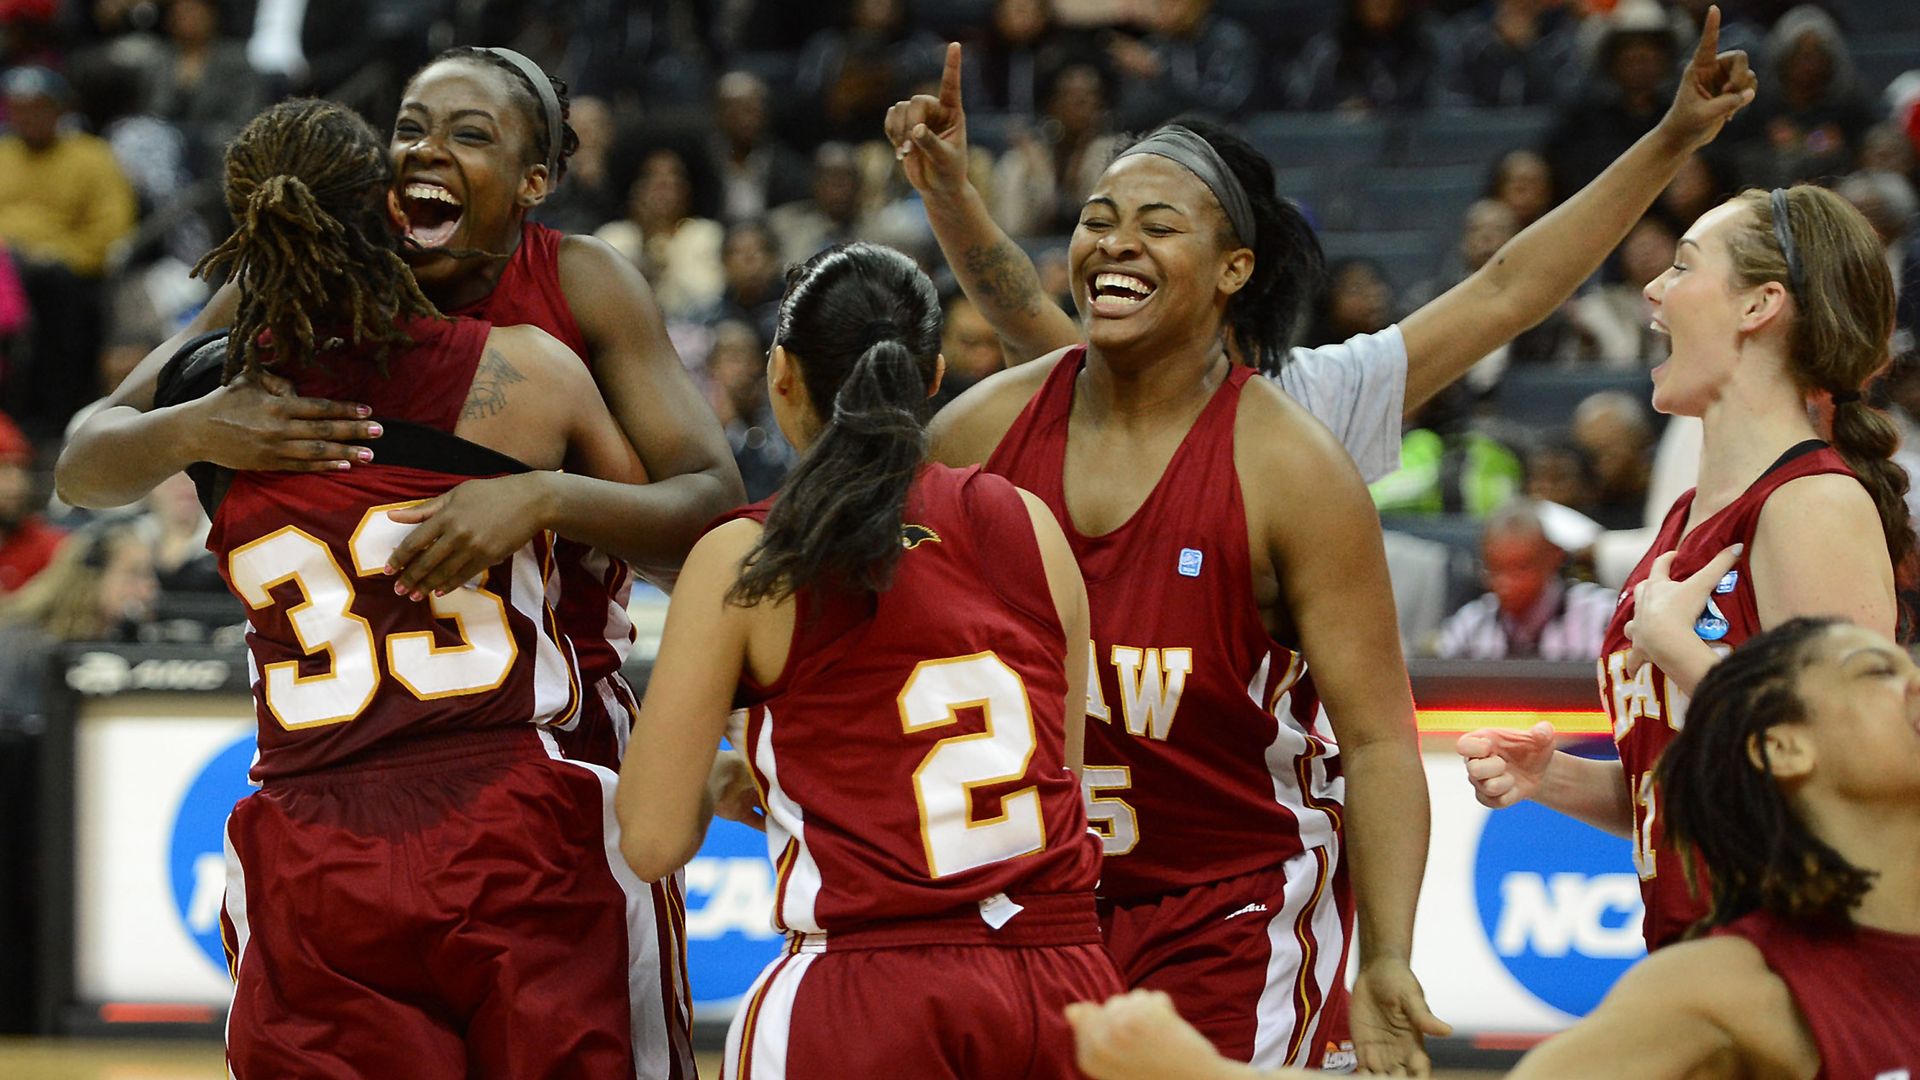 Shaw University women's basketball. Jeff Siner/Charlotte Observer/Tribune News Service via Getty Images